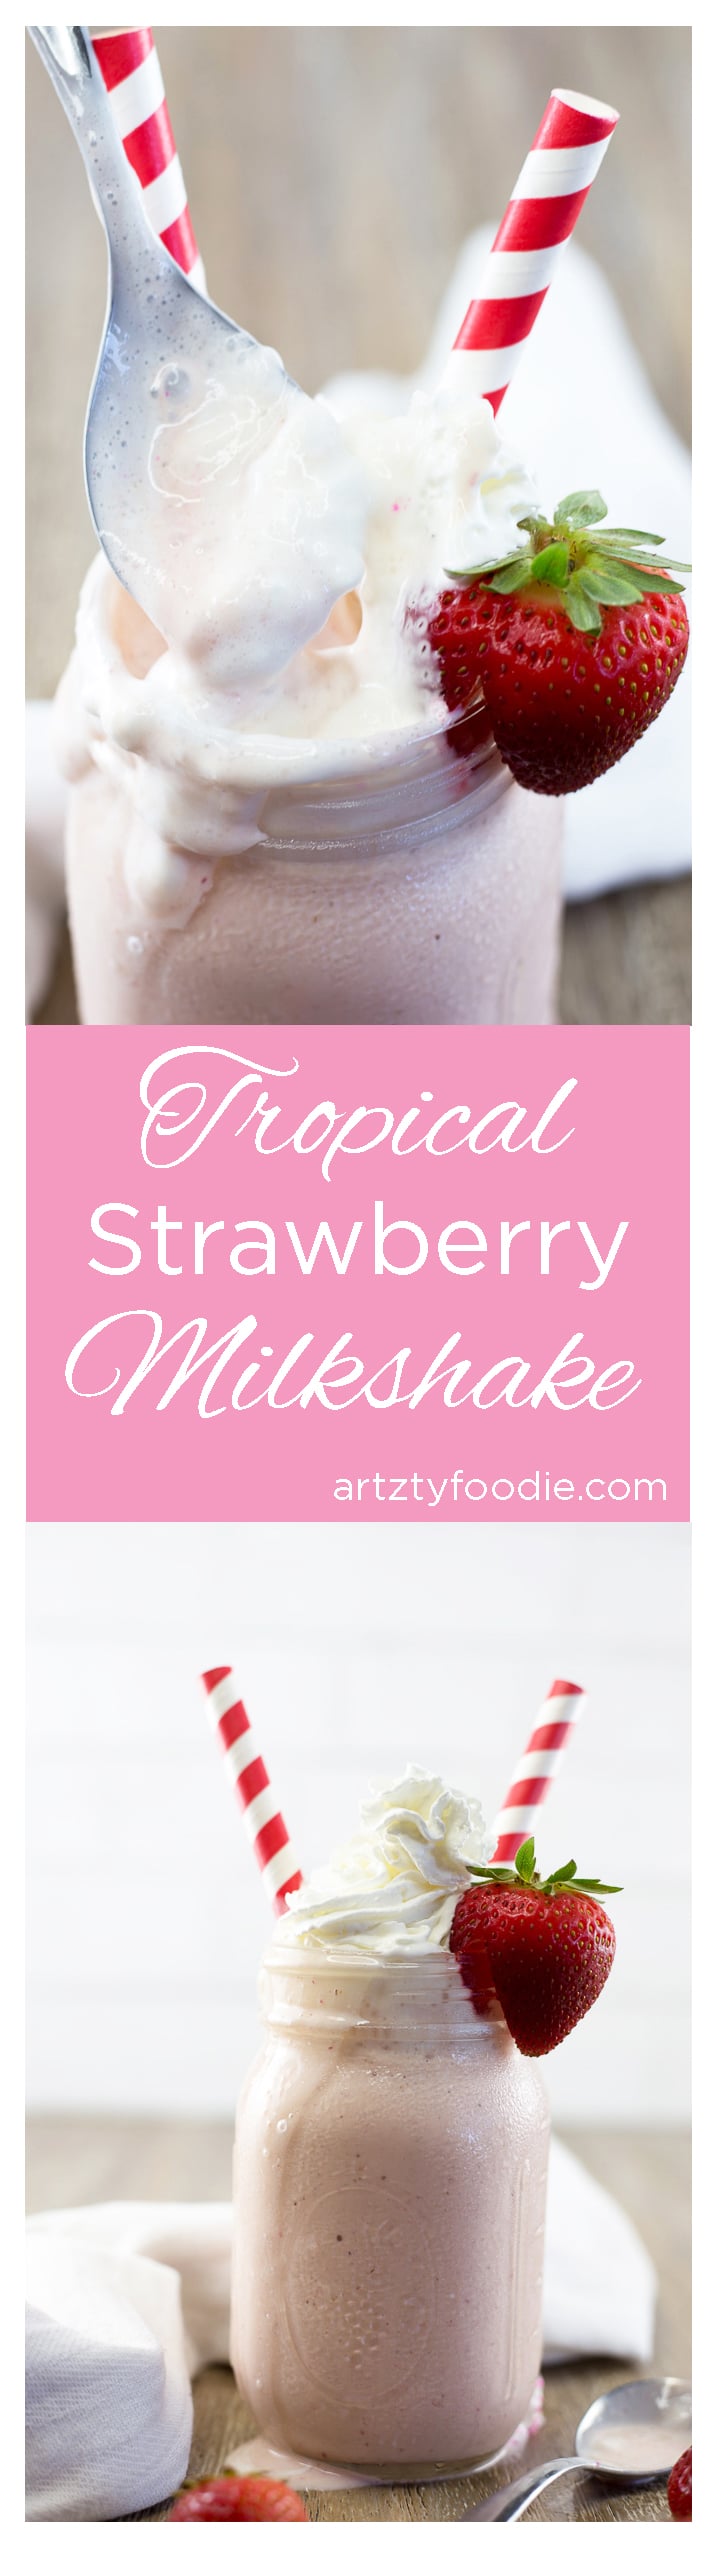 Beat the heat with this creamy, dreamy tropical strawberry milkshake! |artzyfoodie.com|